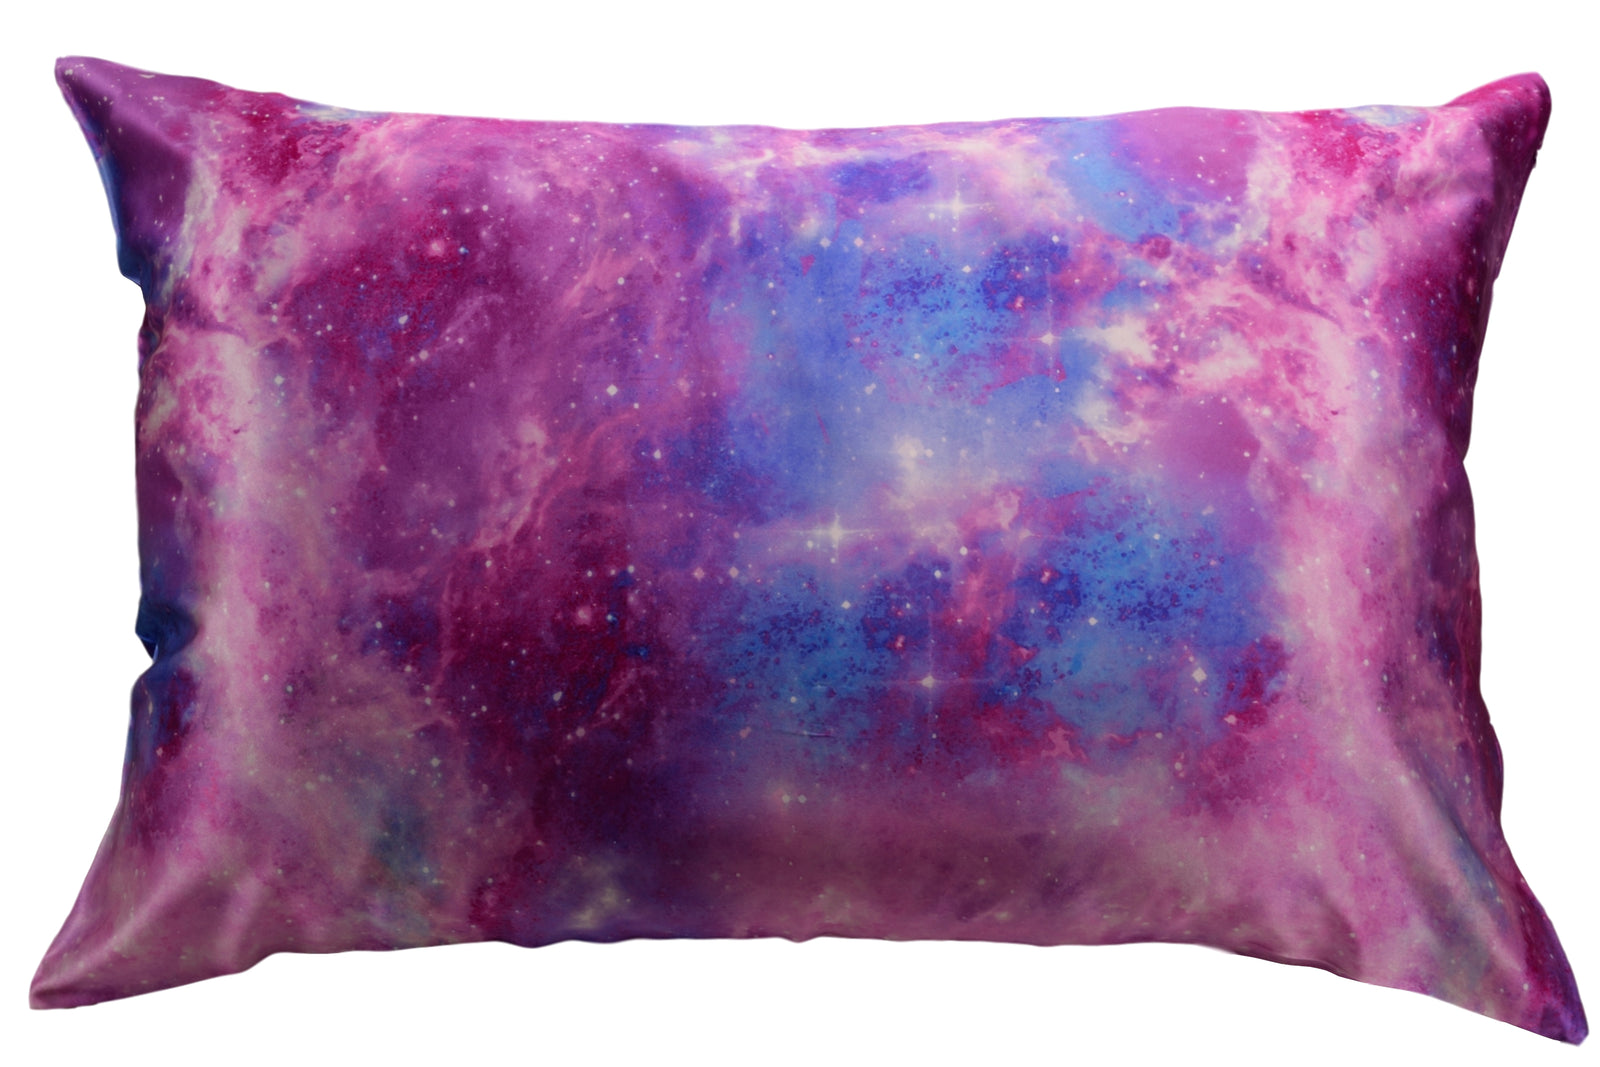 100% Mulberry Silk Pillowcases from Celestial Silk